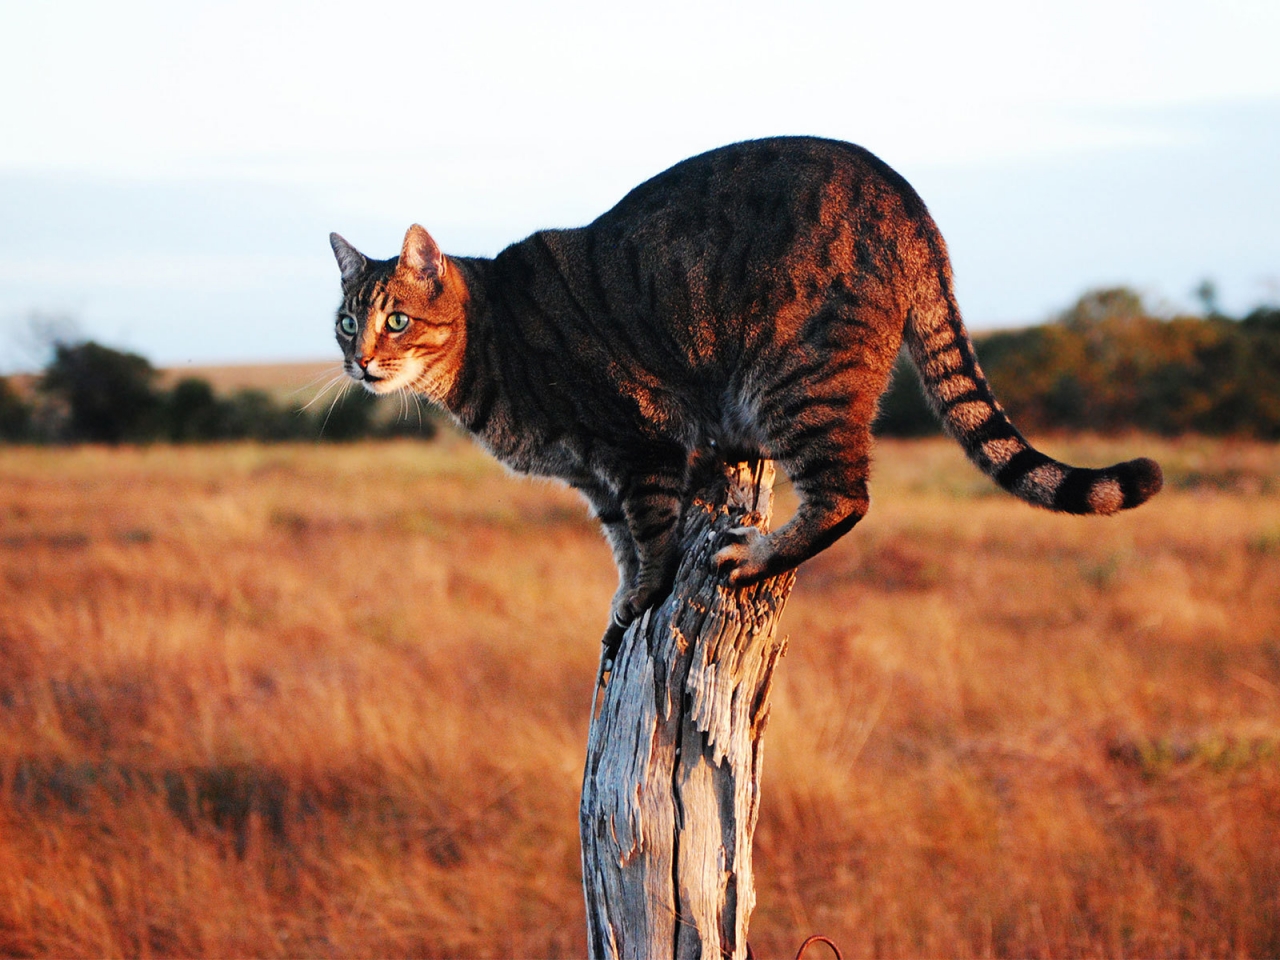 Savannah Cat on Stump for 1280 x 960 resolution